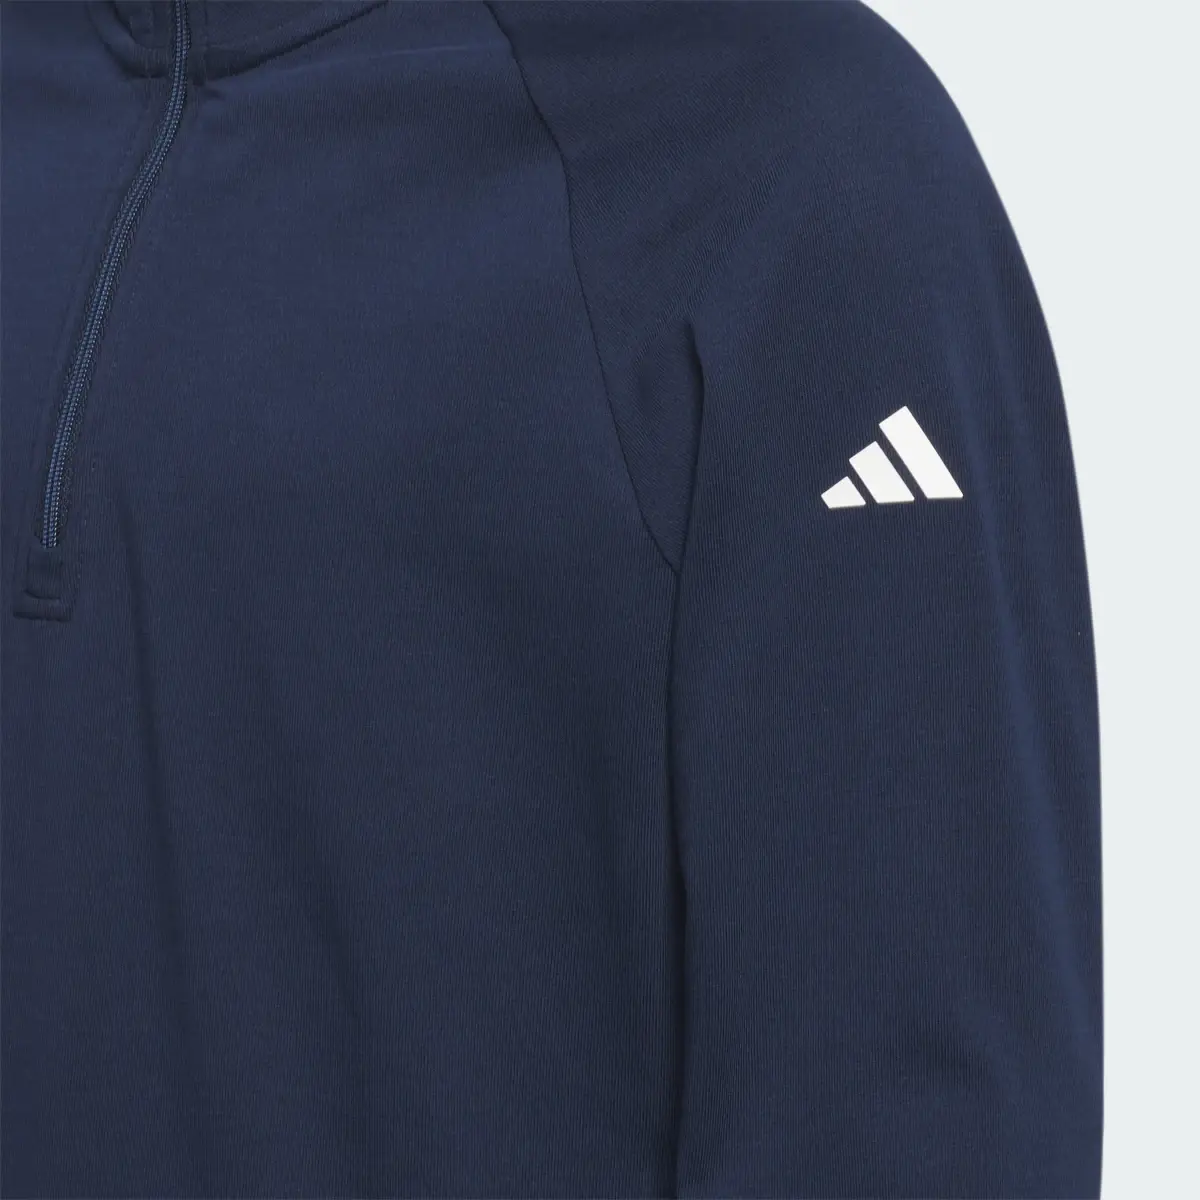 Adidas 1/4-Zip Layer Pullover. 3